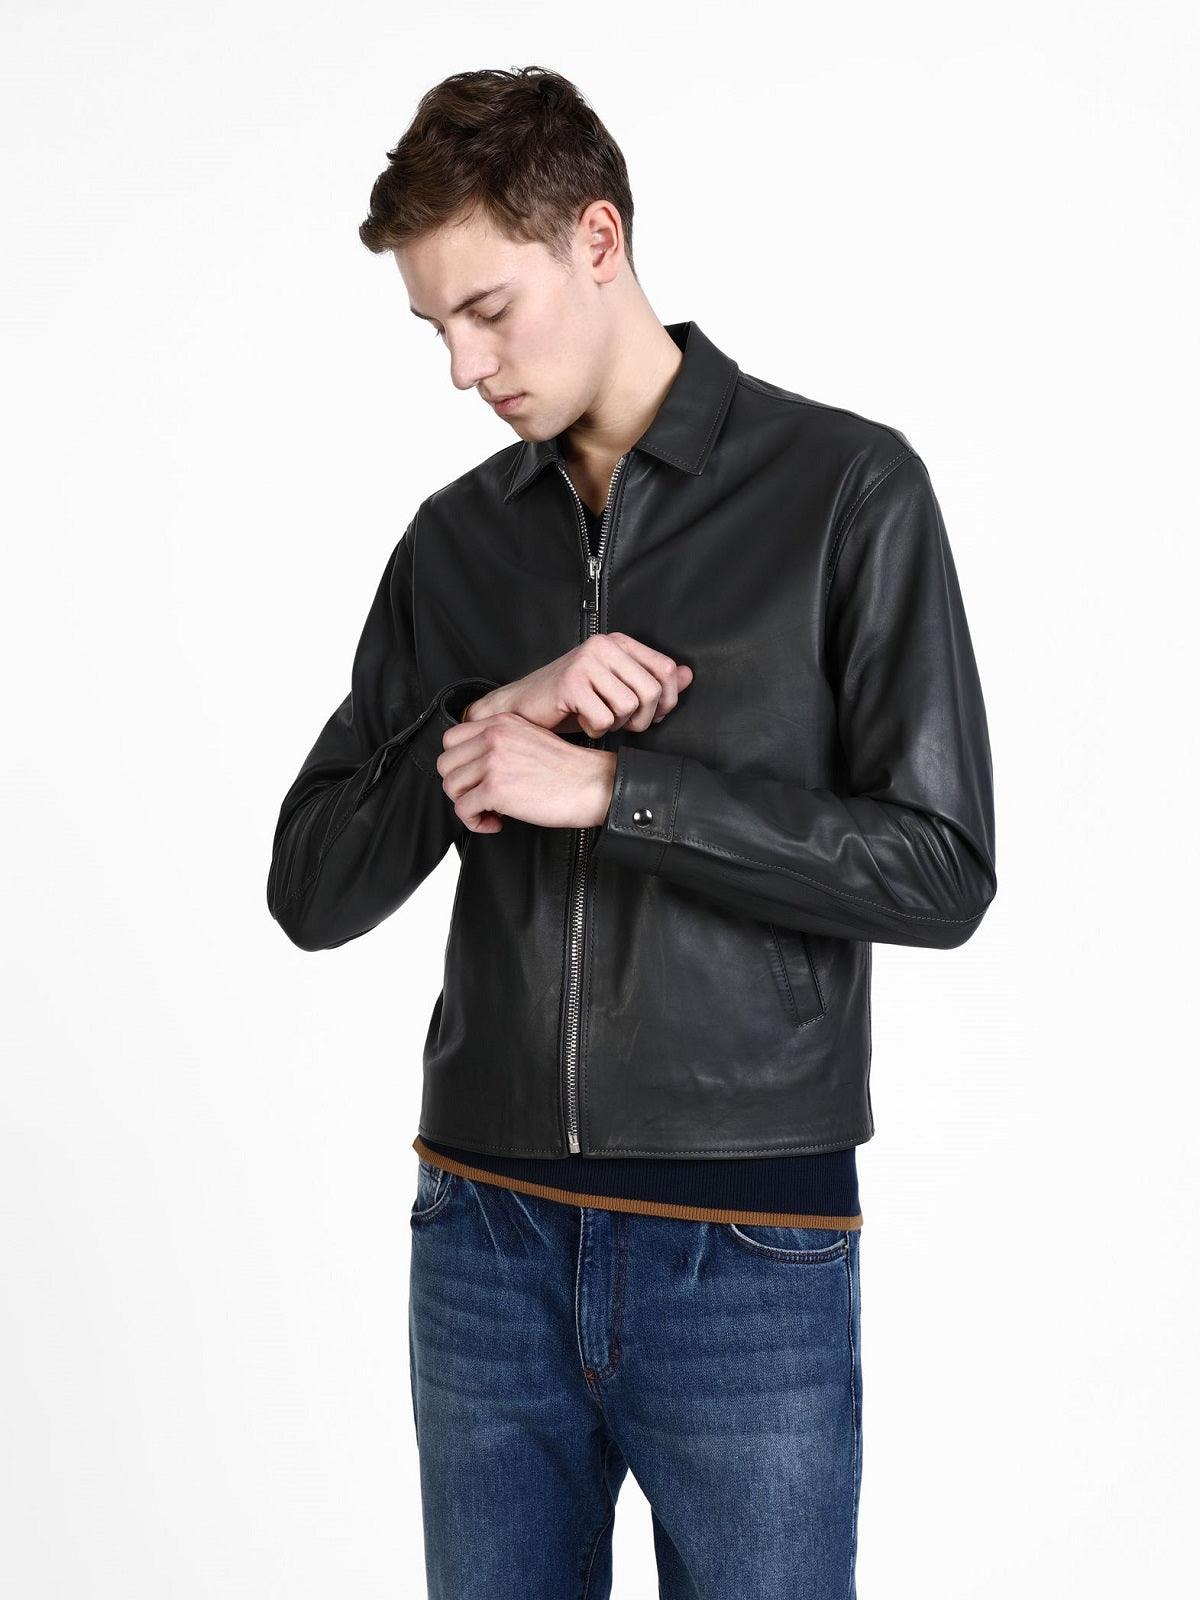 Men's Shirt Leather Jacket In Black